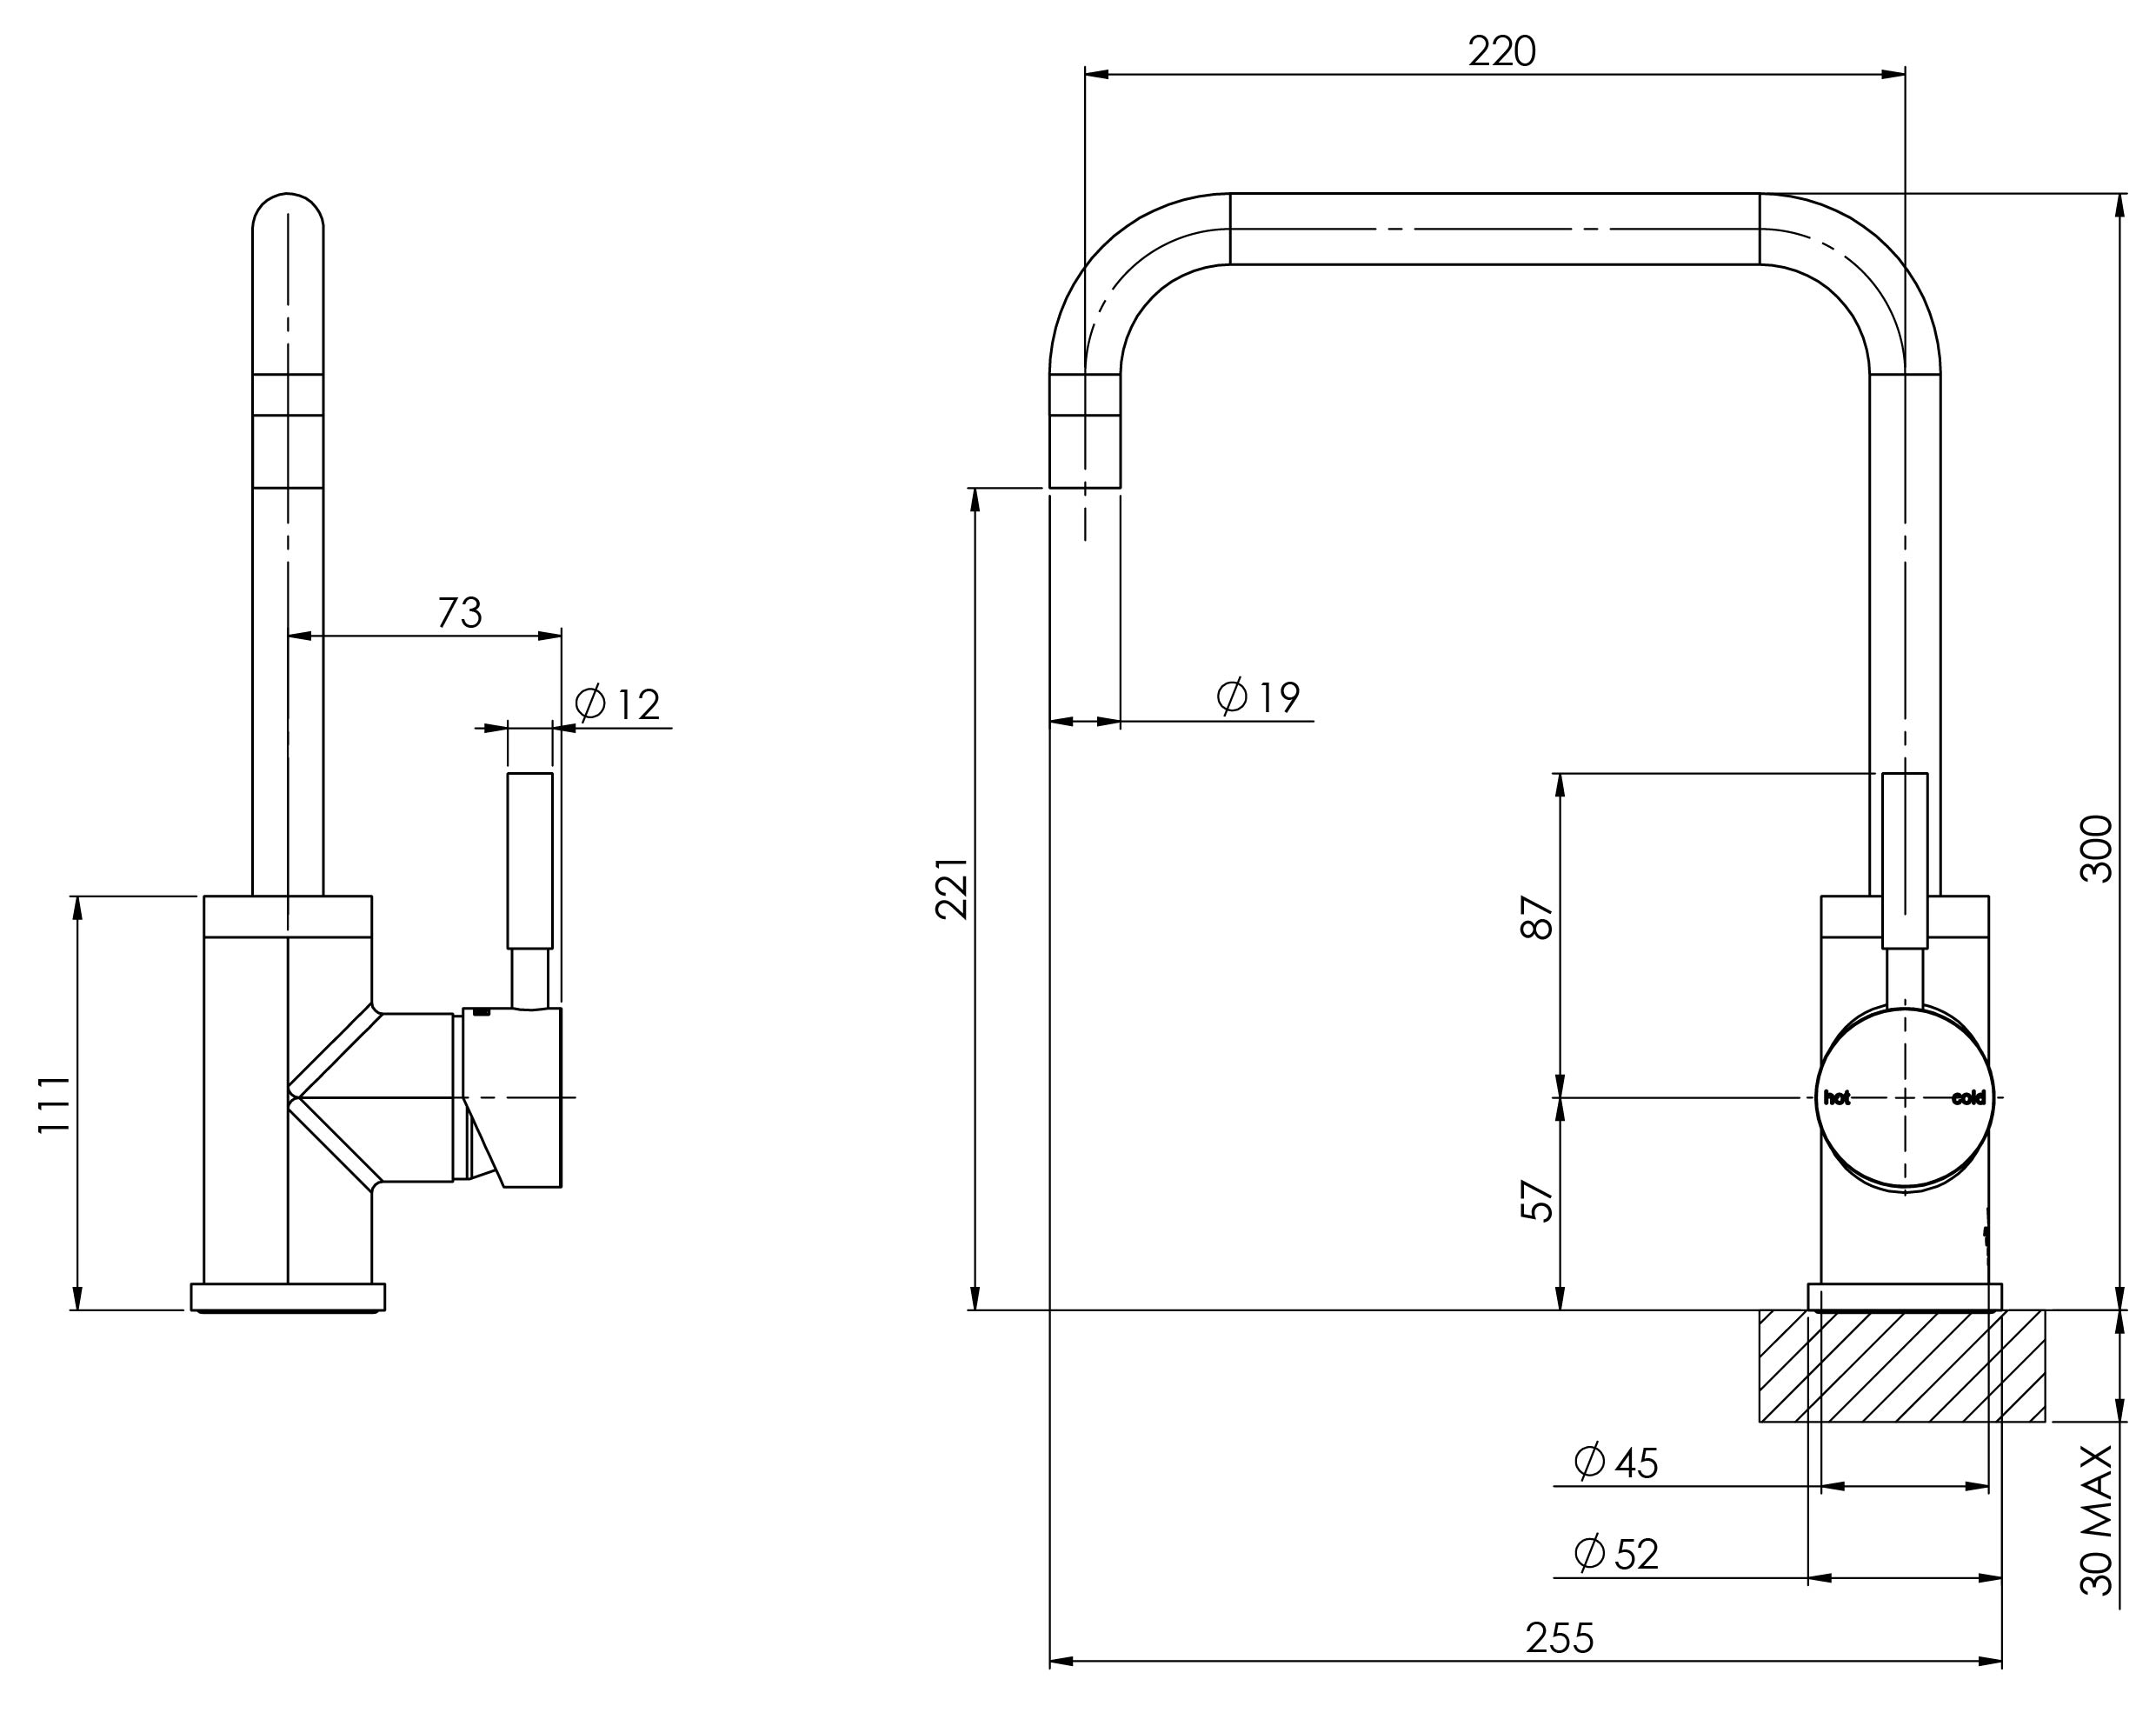 Phoenix Vivid Side Lever Sink Mixer (220mm) specifications